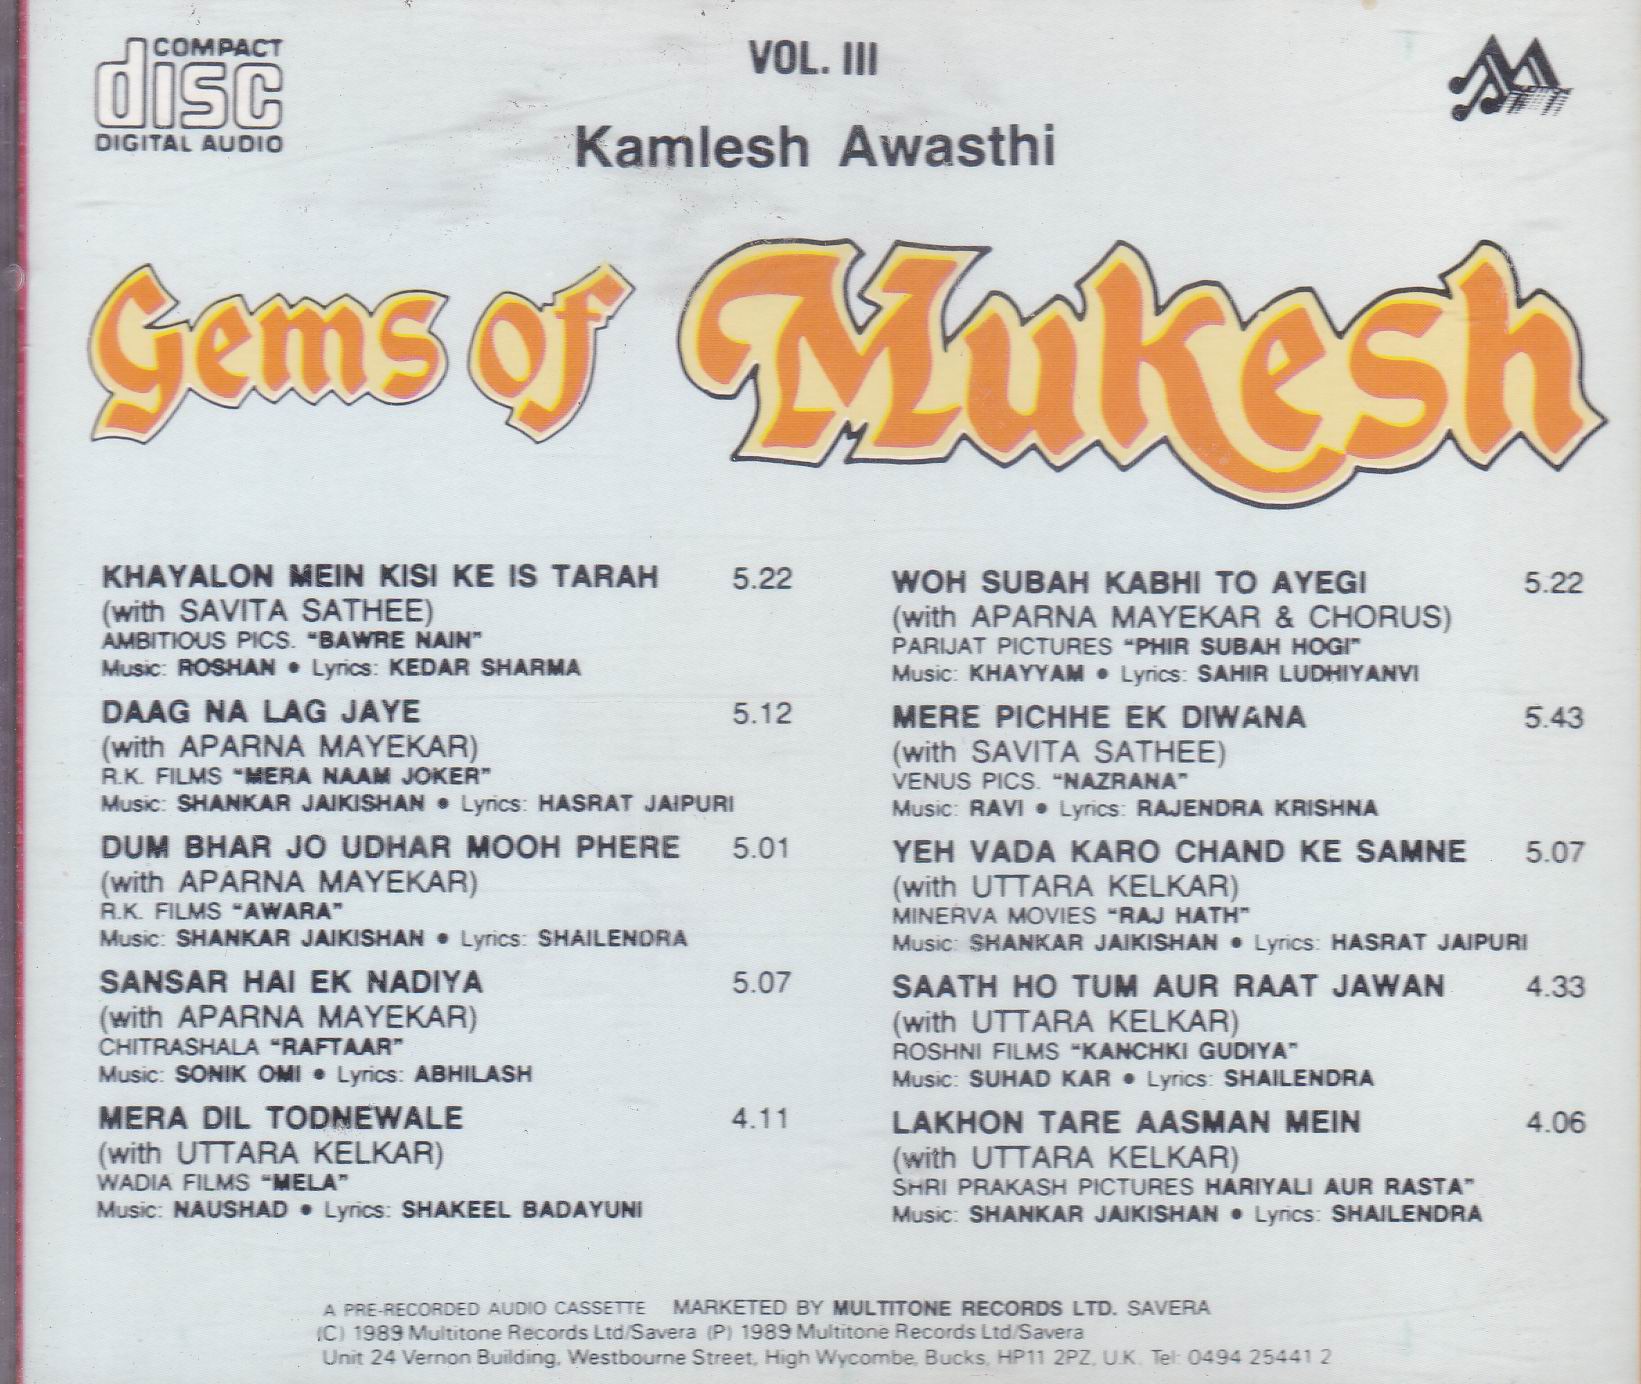 Gems Of Mukesh Kamlesh Awasthi Multitone Cd - Click Image to Close